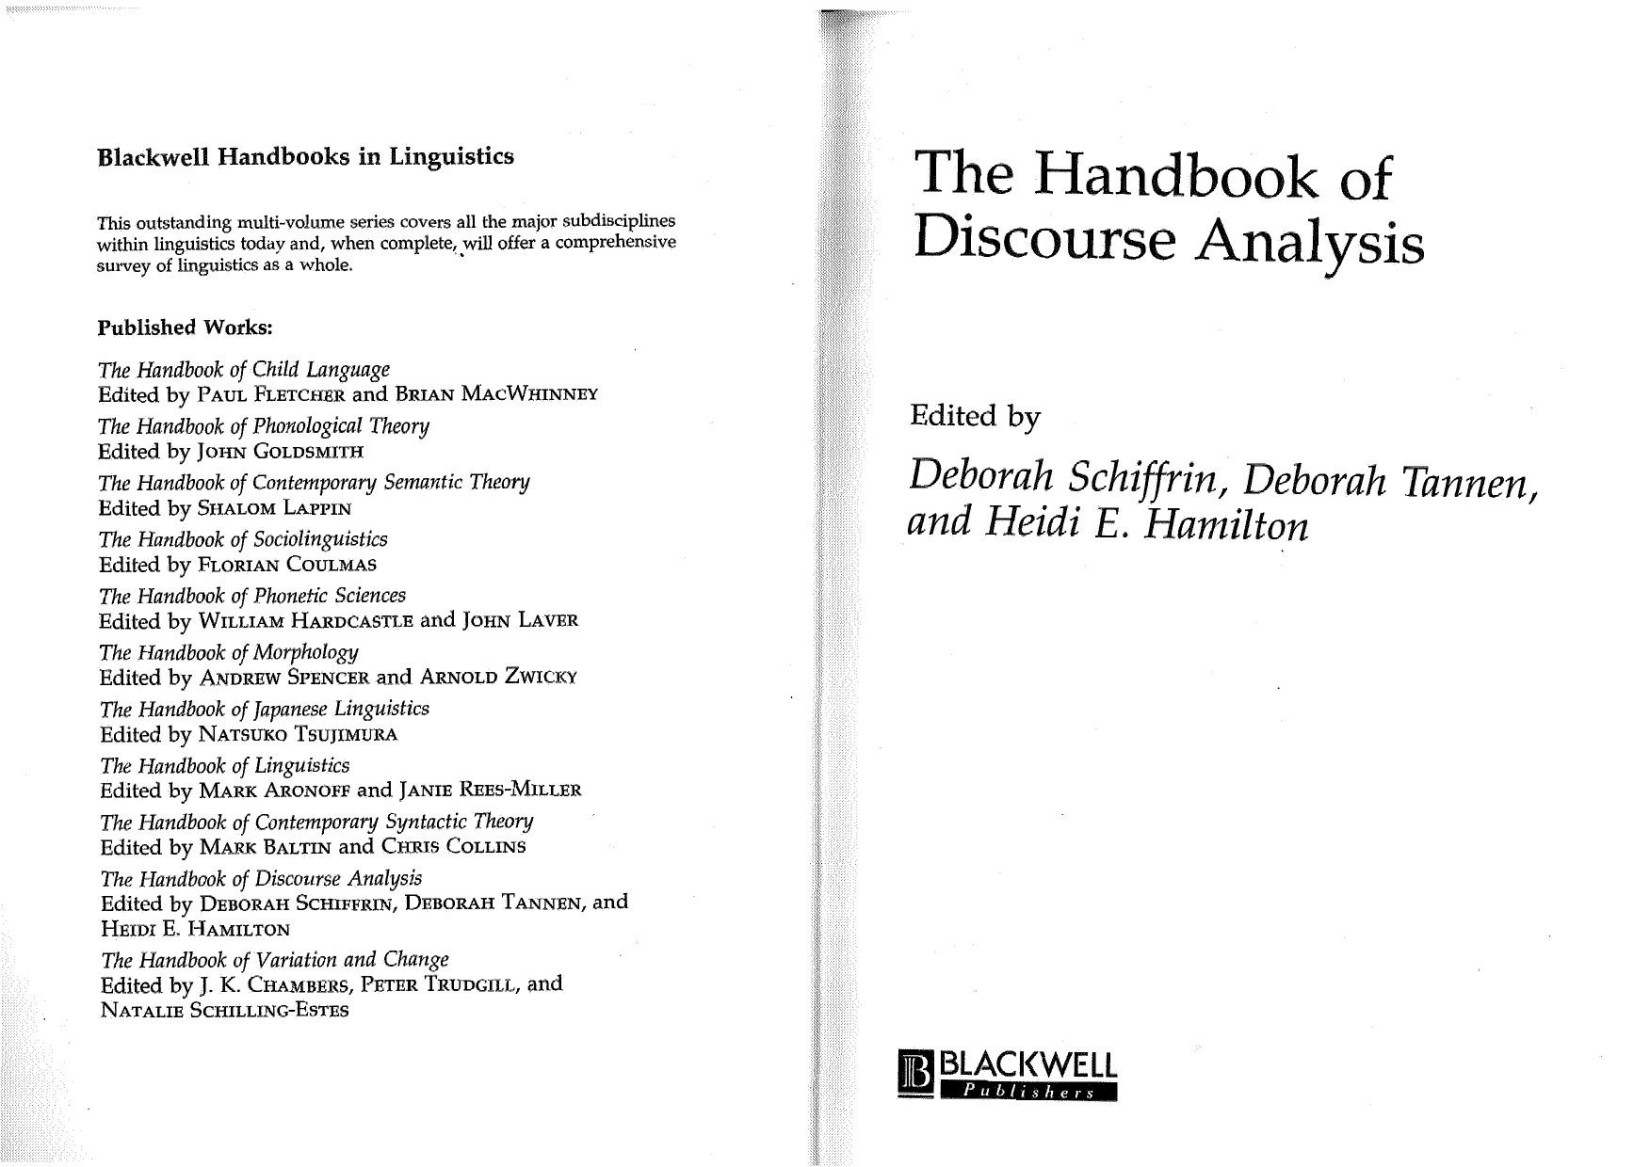 Blackwell Handbook of Discourse Analysis 2001